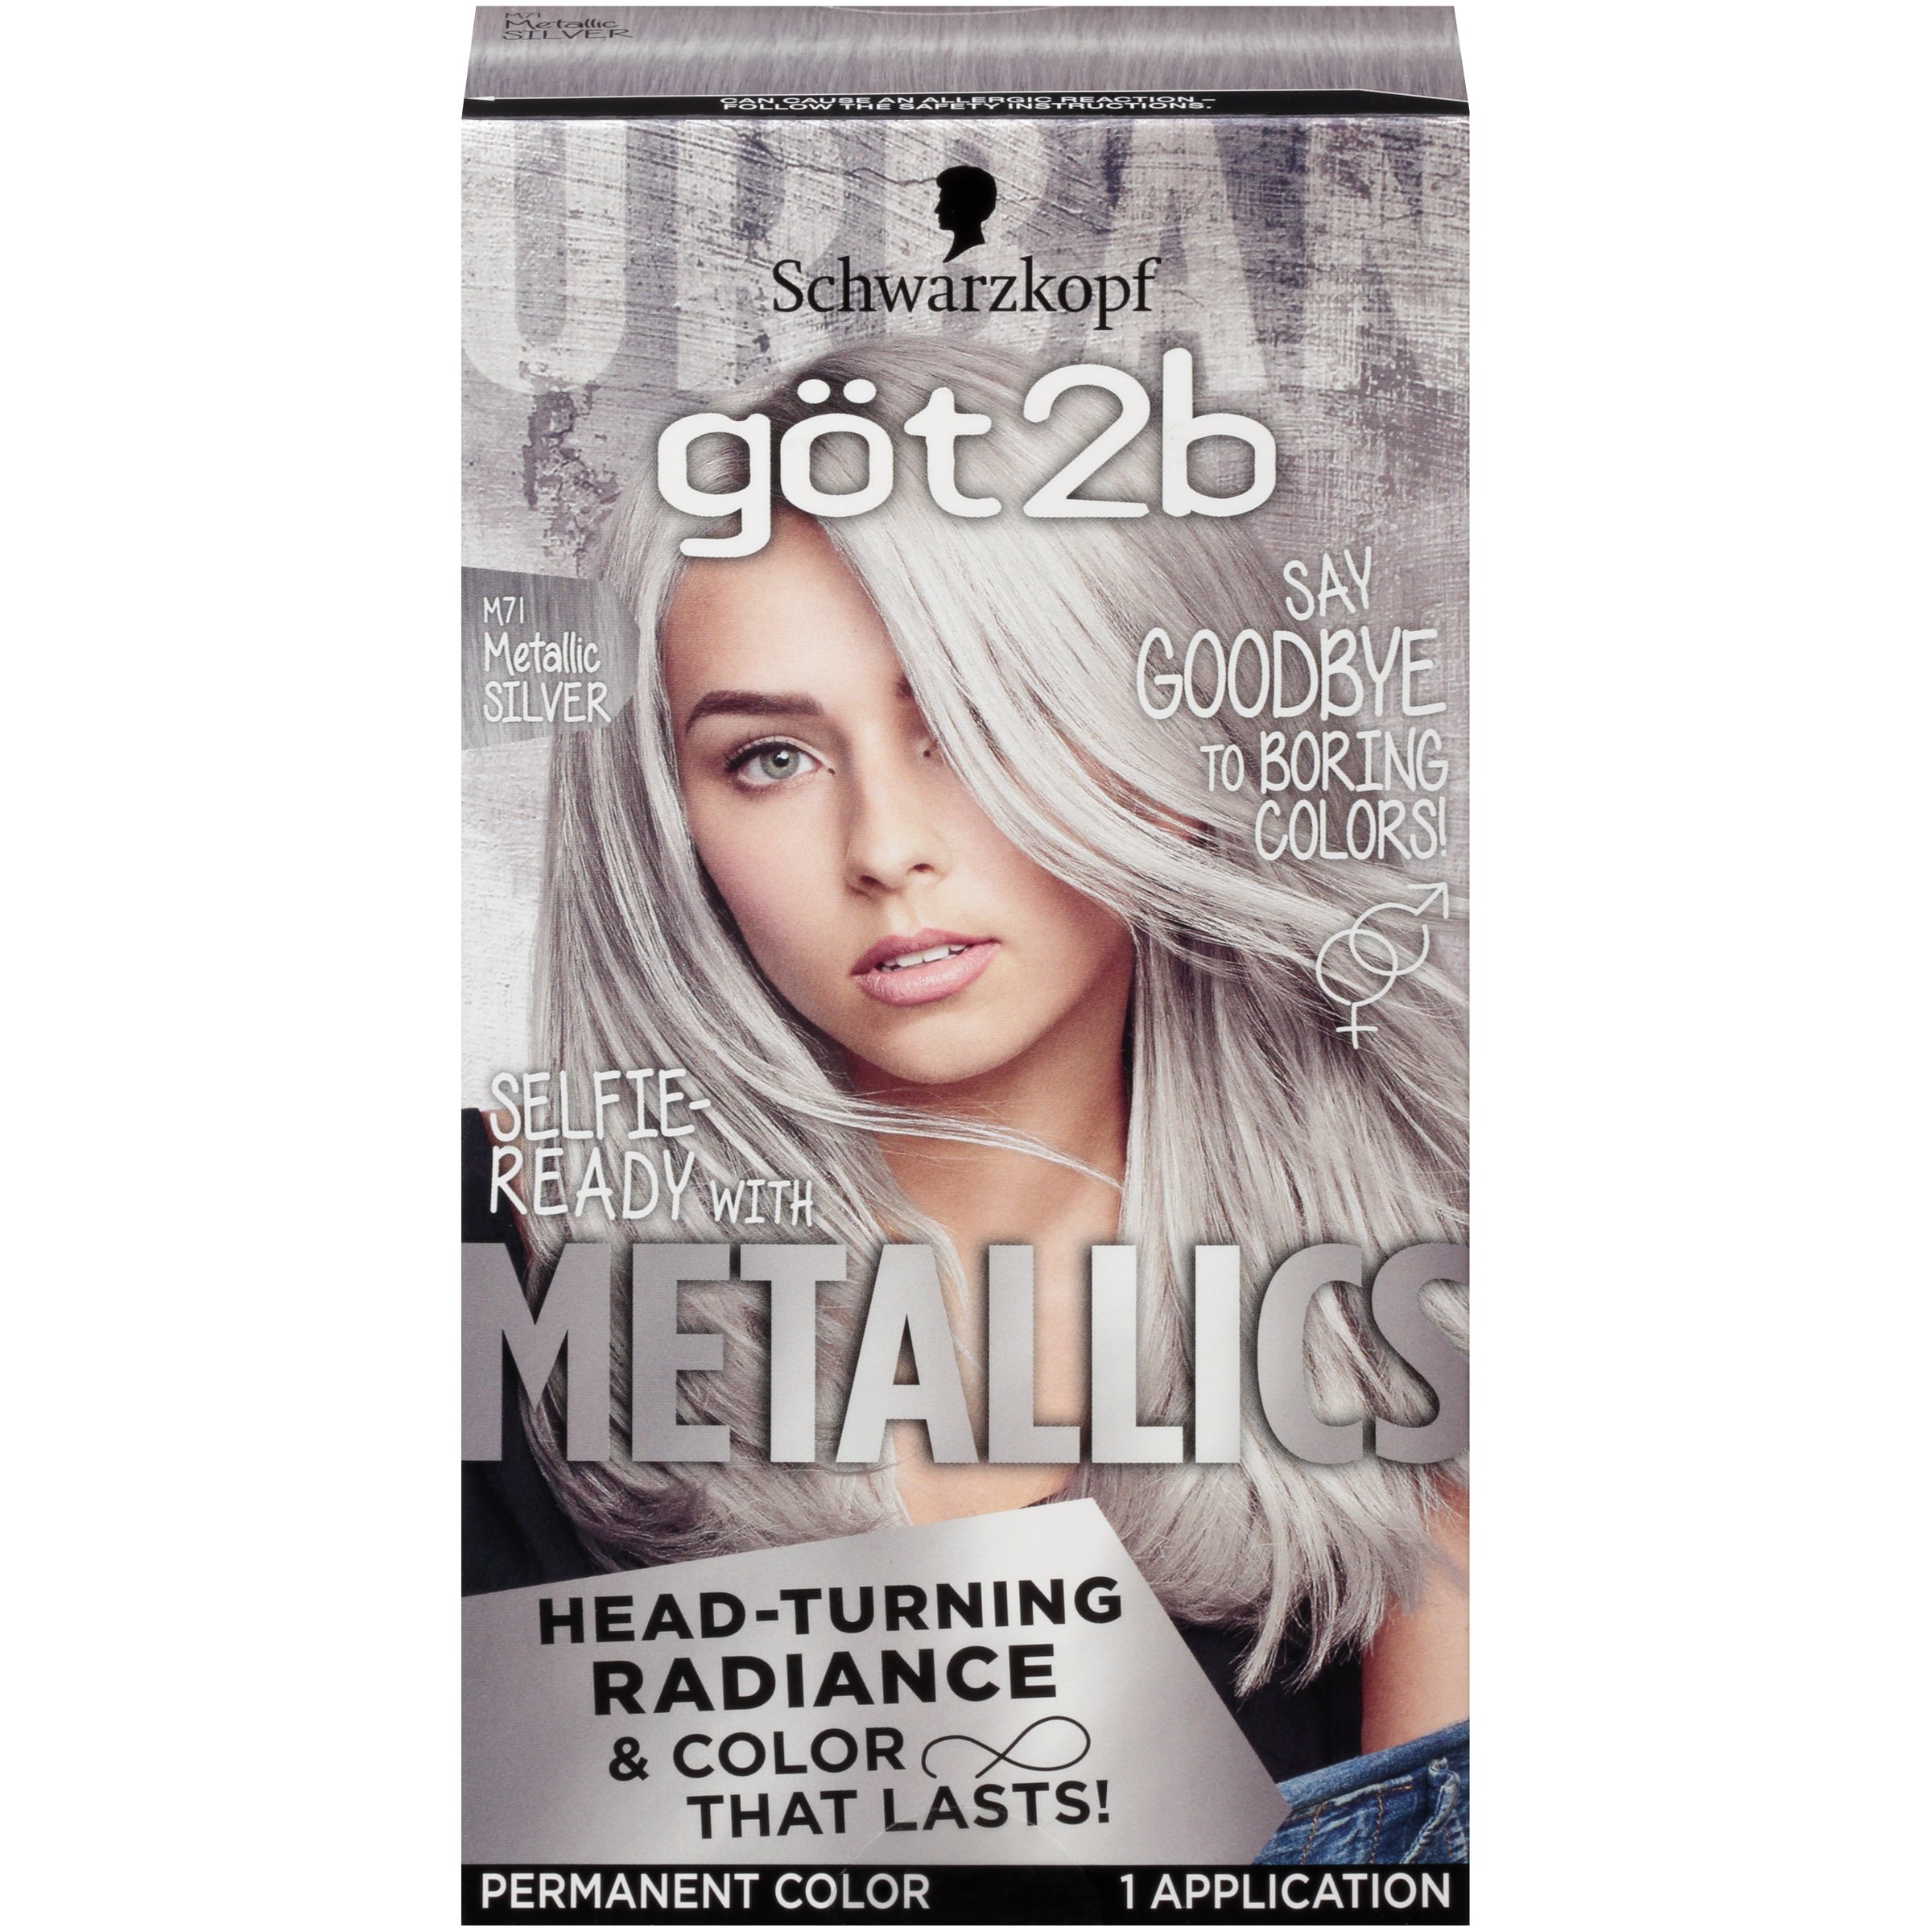 Got2b Metallics Permanent Hair Color, M71 Metallics Silver - Shop Hair Care  at H-E-B